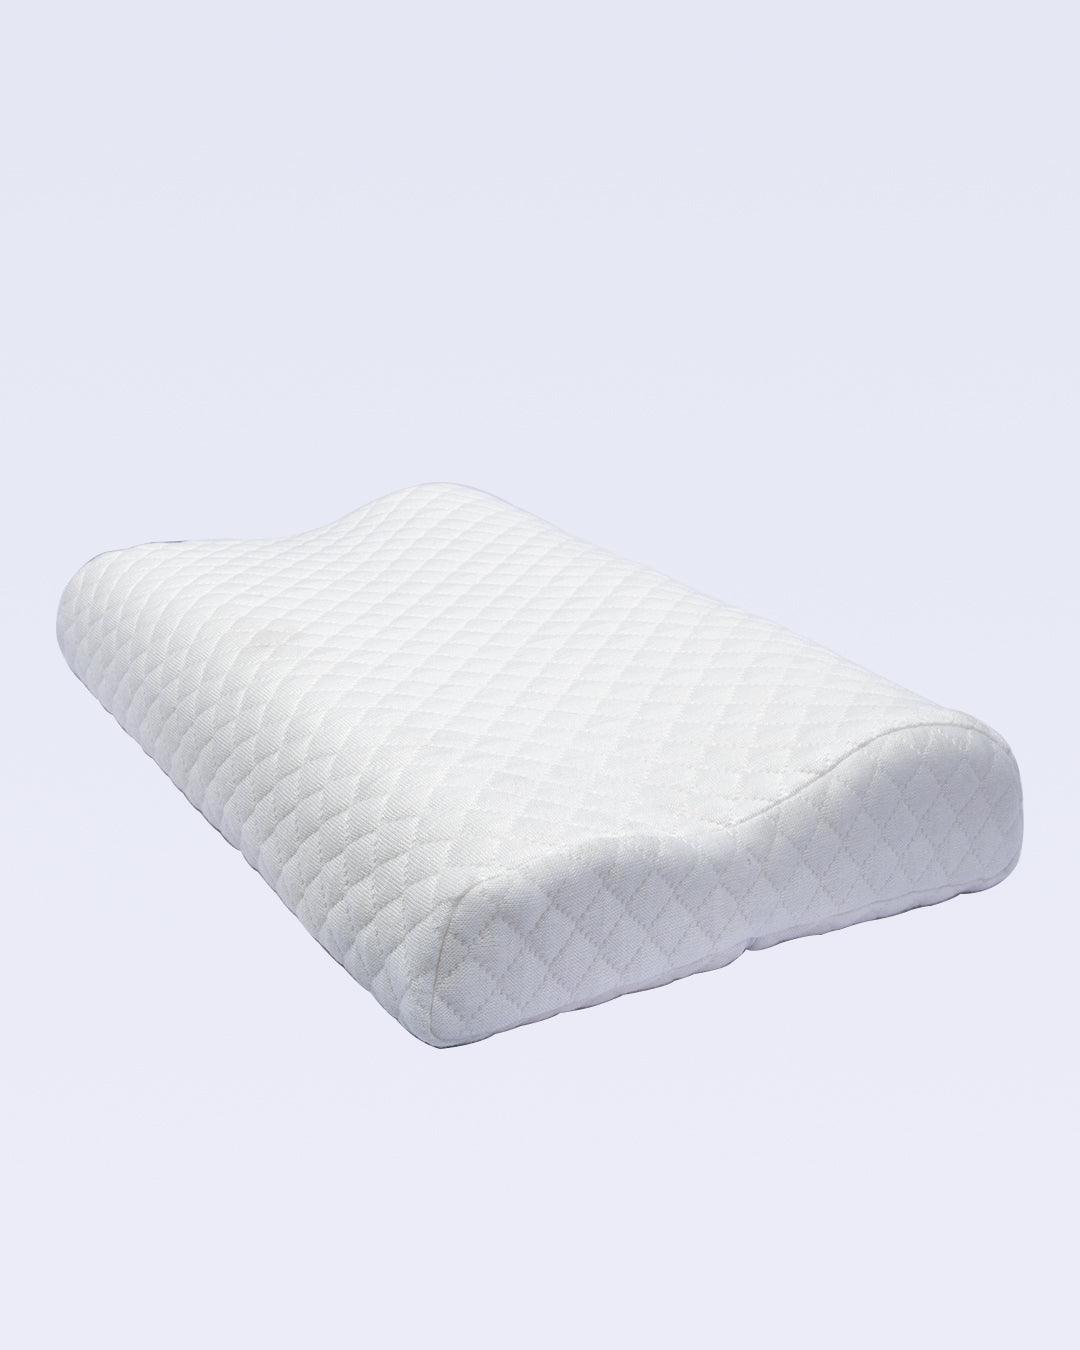 Donati Foam Kids Pillow - Removable & Washable Pillow